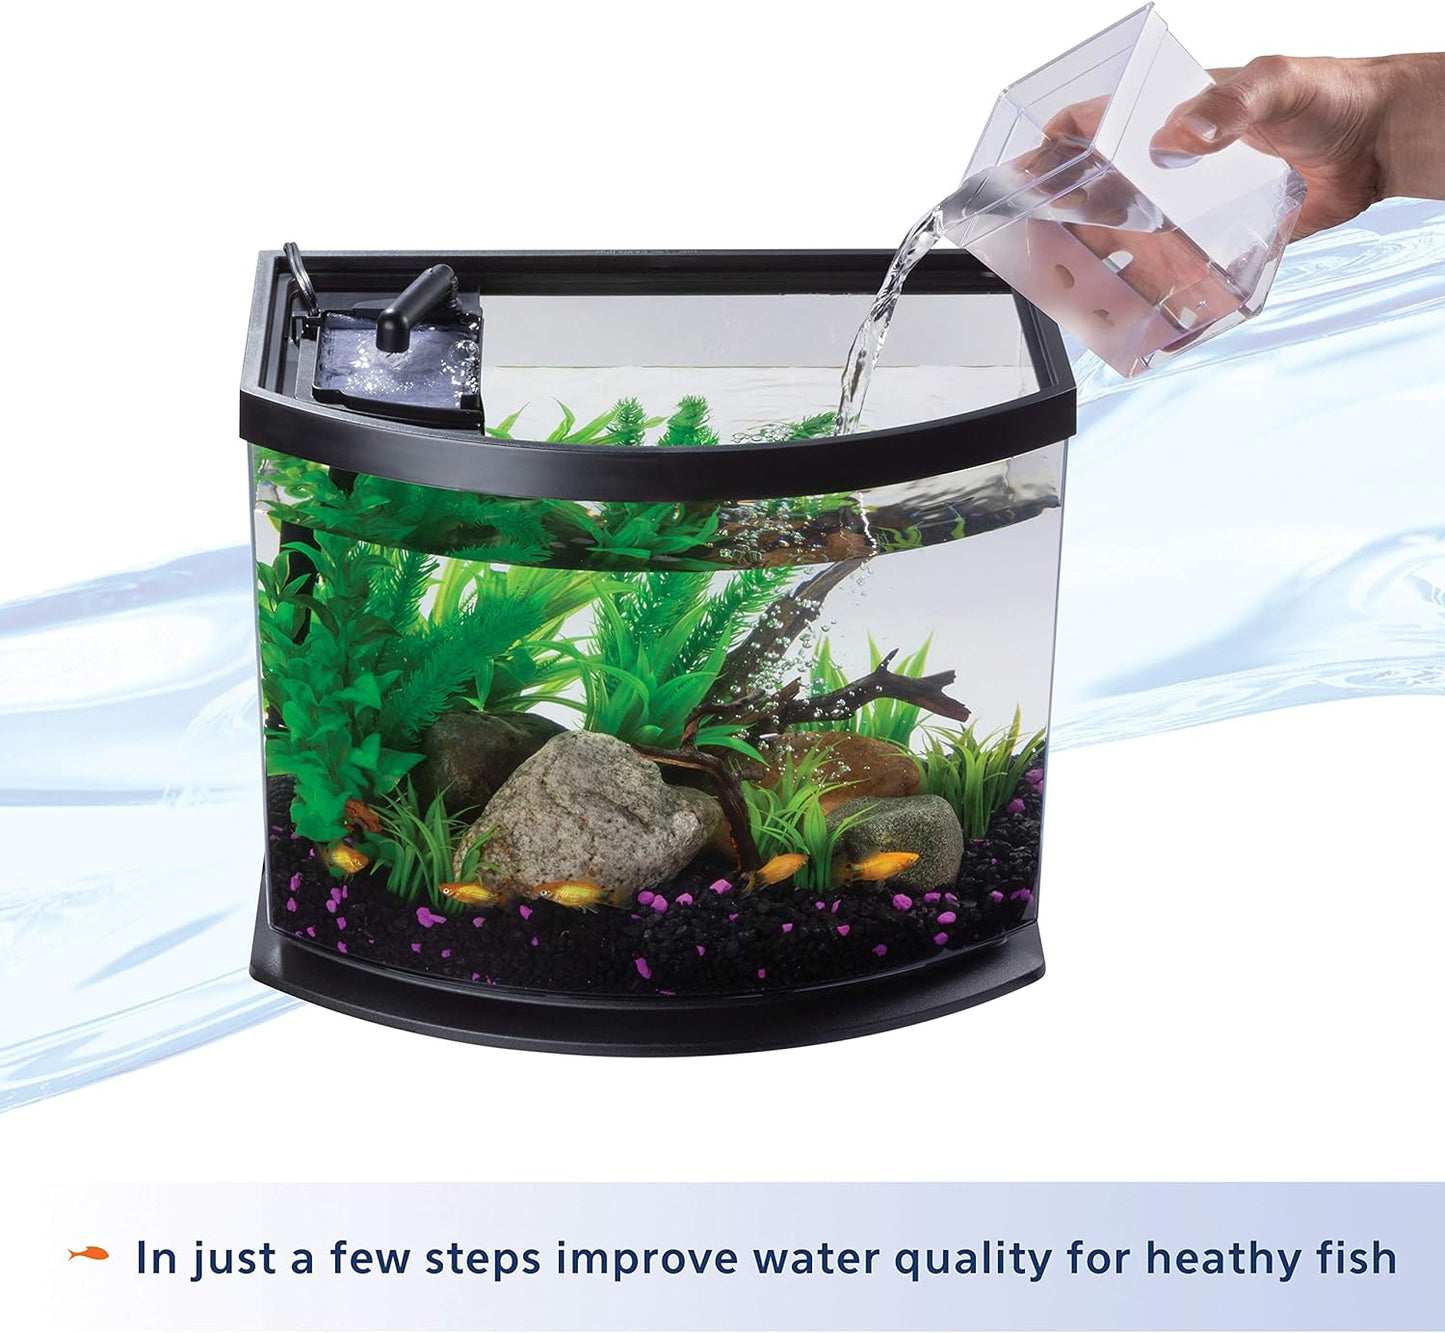 Aqueon LED MiniBow Small Aquarium Fish Tank Kit with SmartClean Technology, Black, 5 Gallon